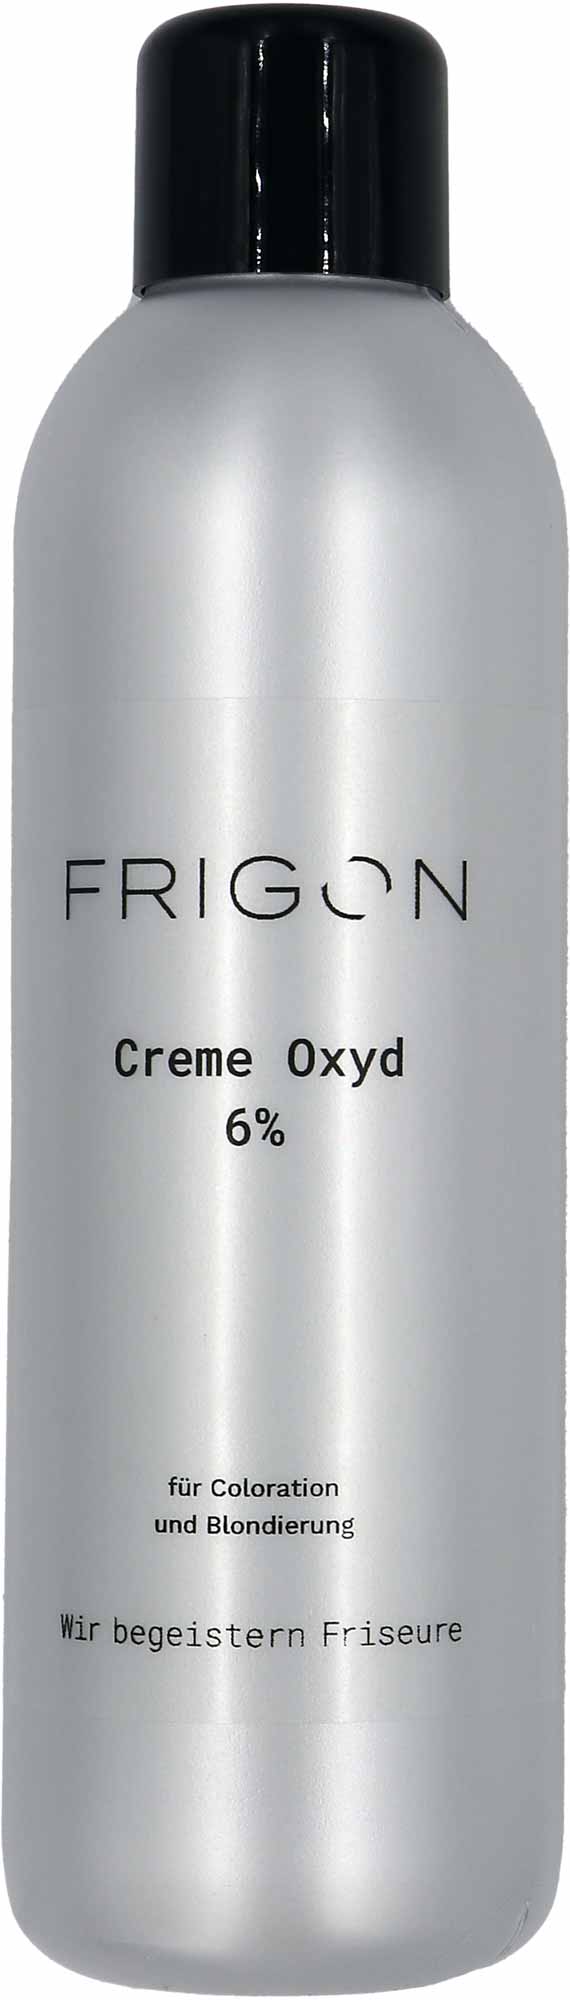 Frigon Creme Oxyd 6% 1L